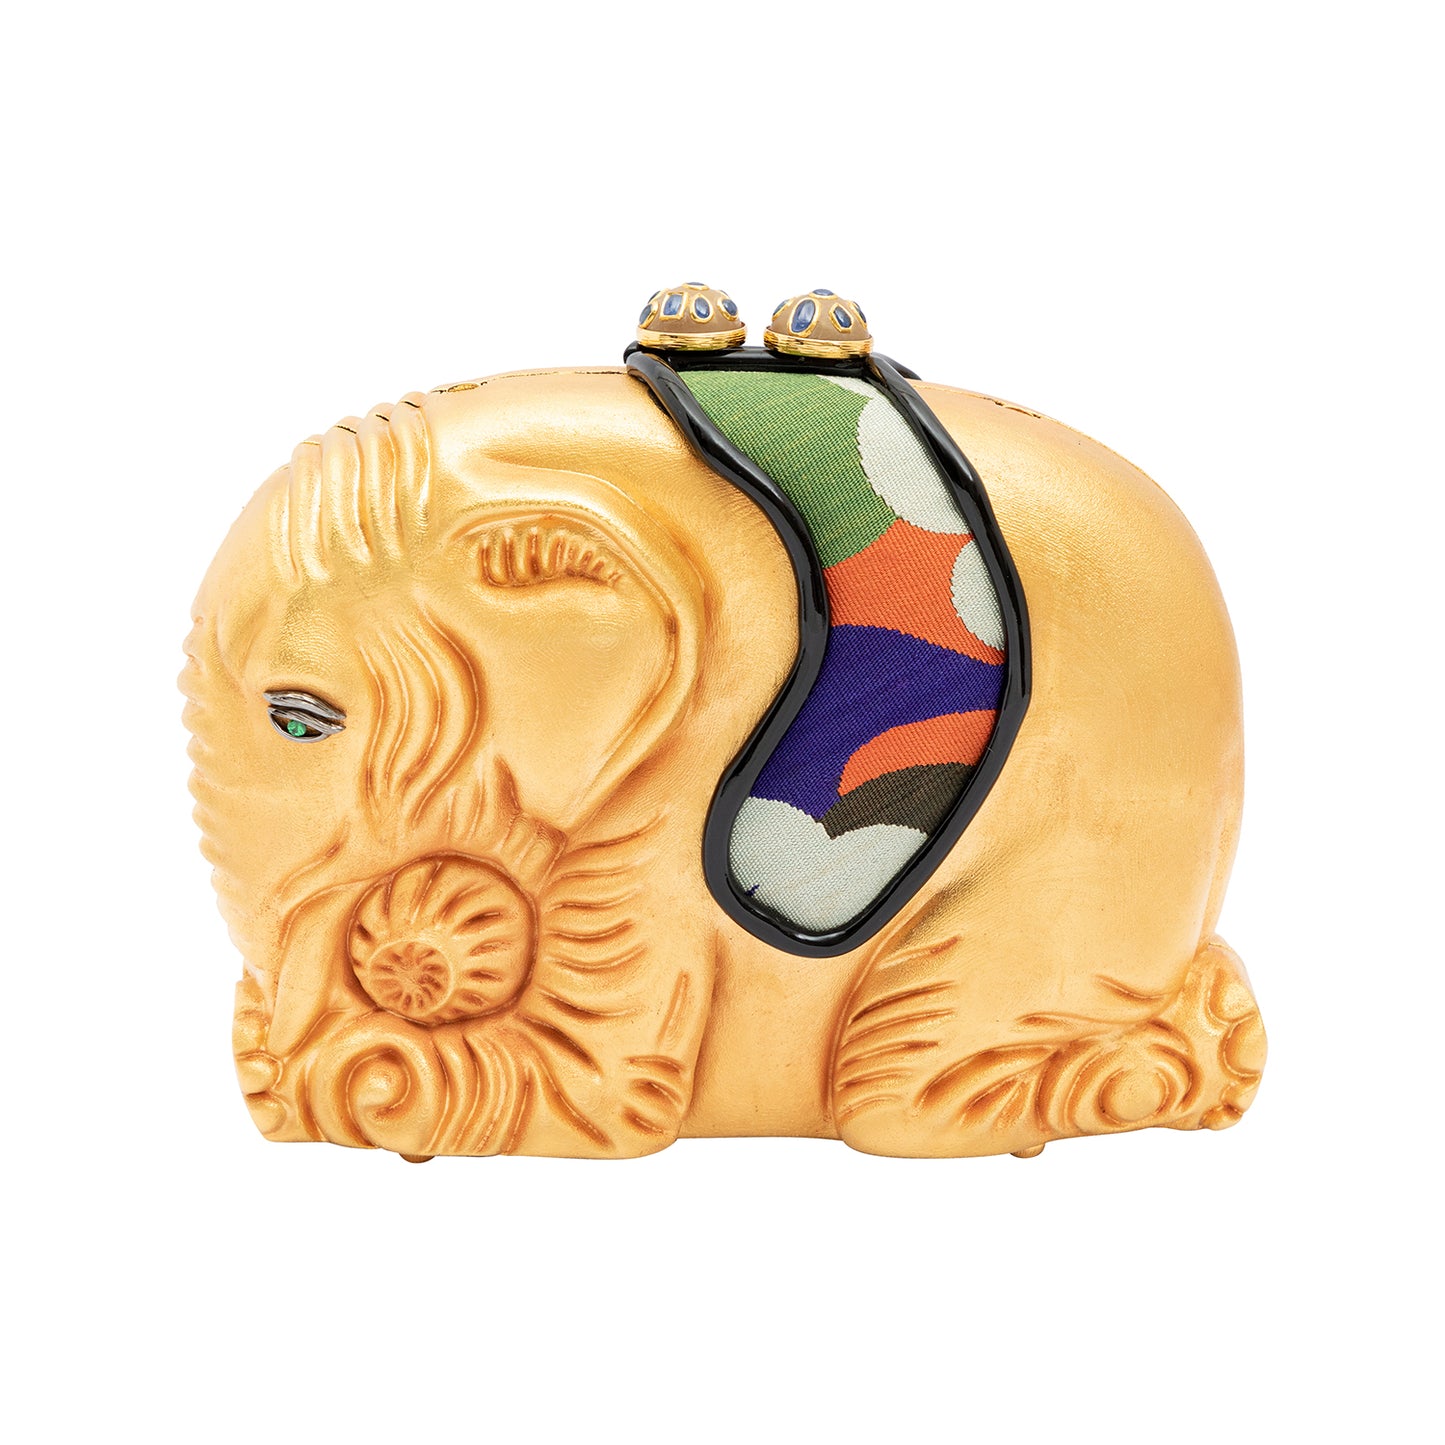 Golden Elephant Handbag with Tsavorite and Pearl